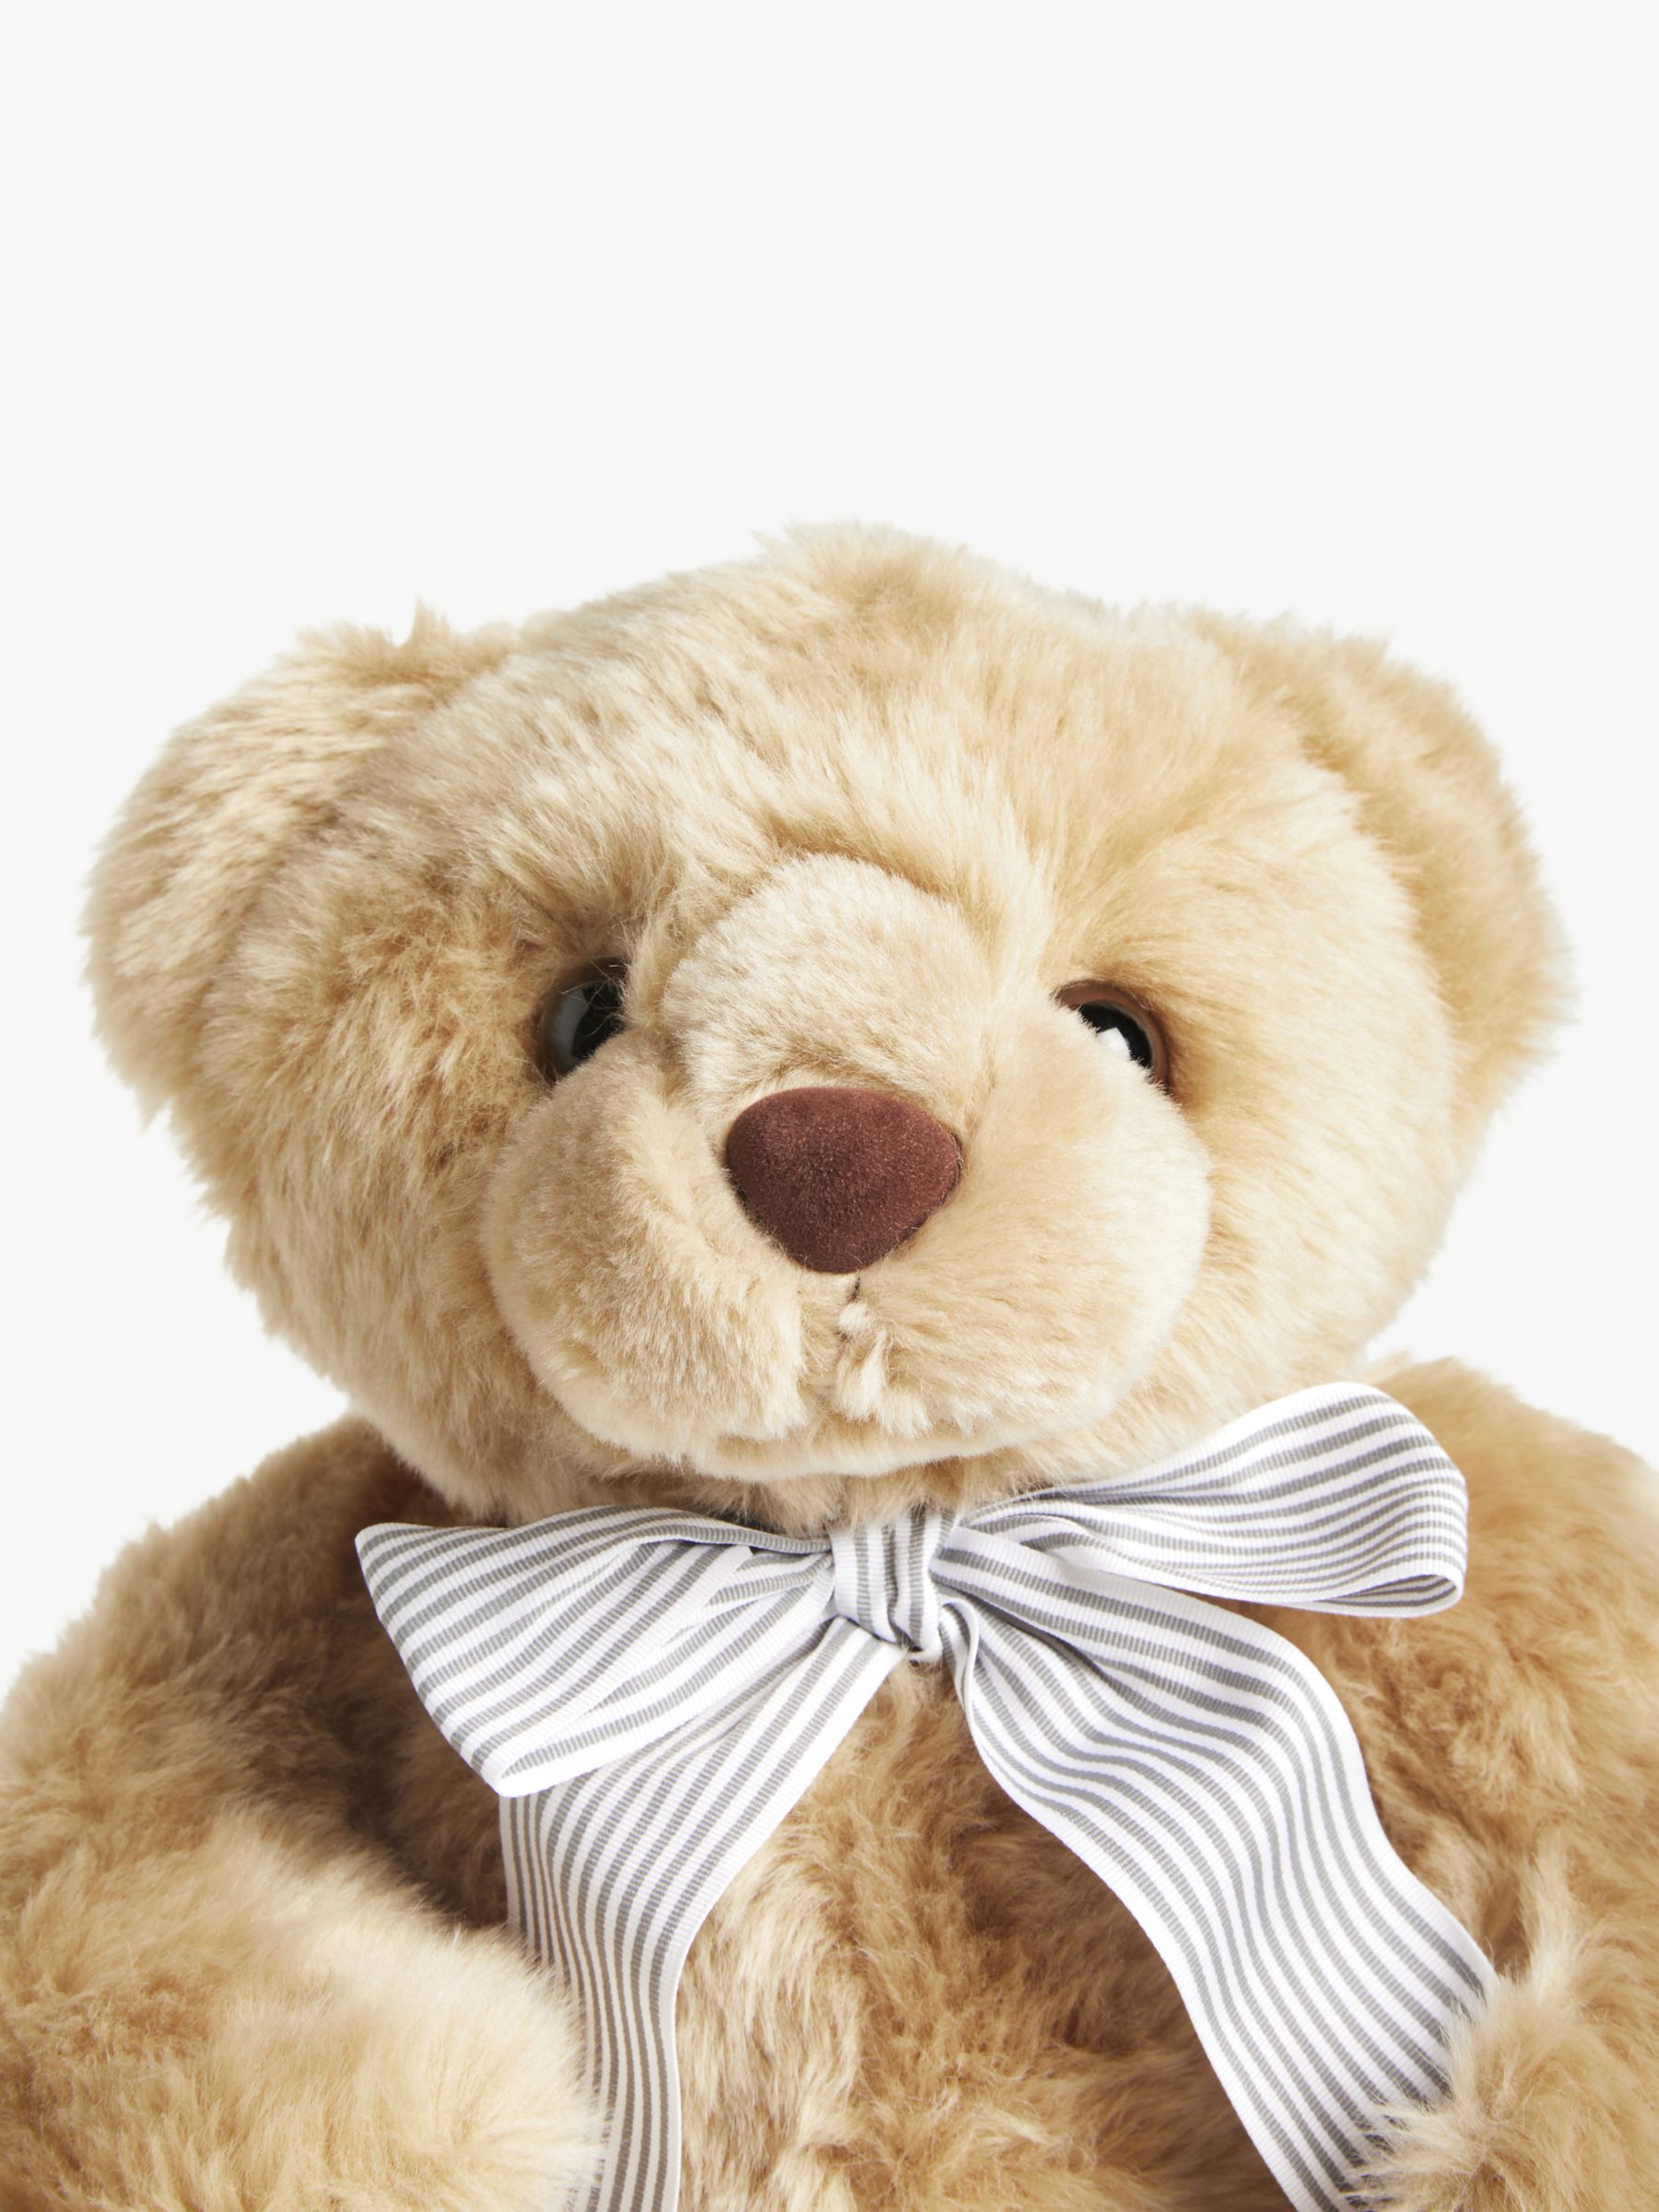 buy biggest teddy bear online